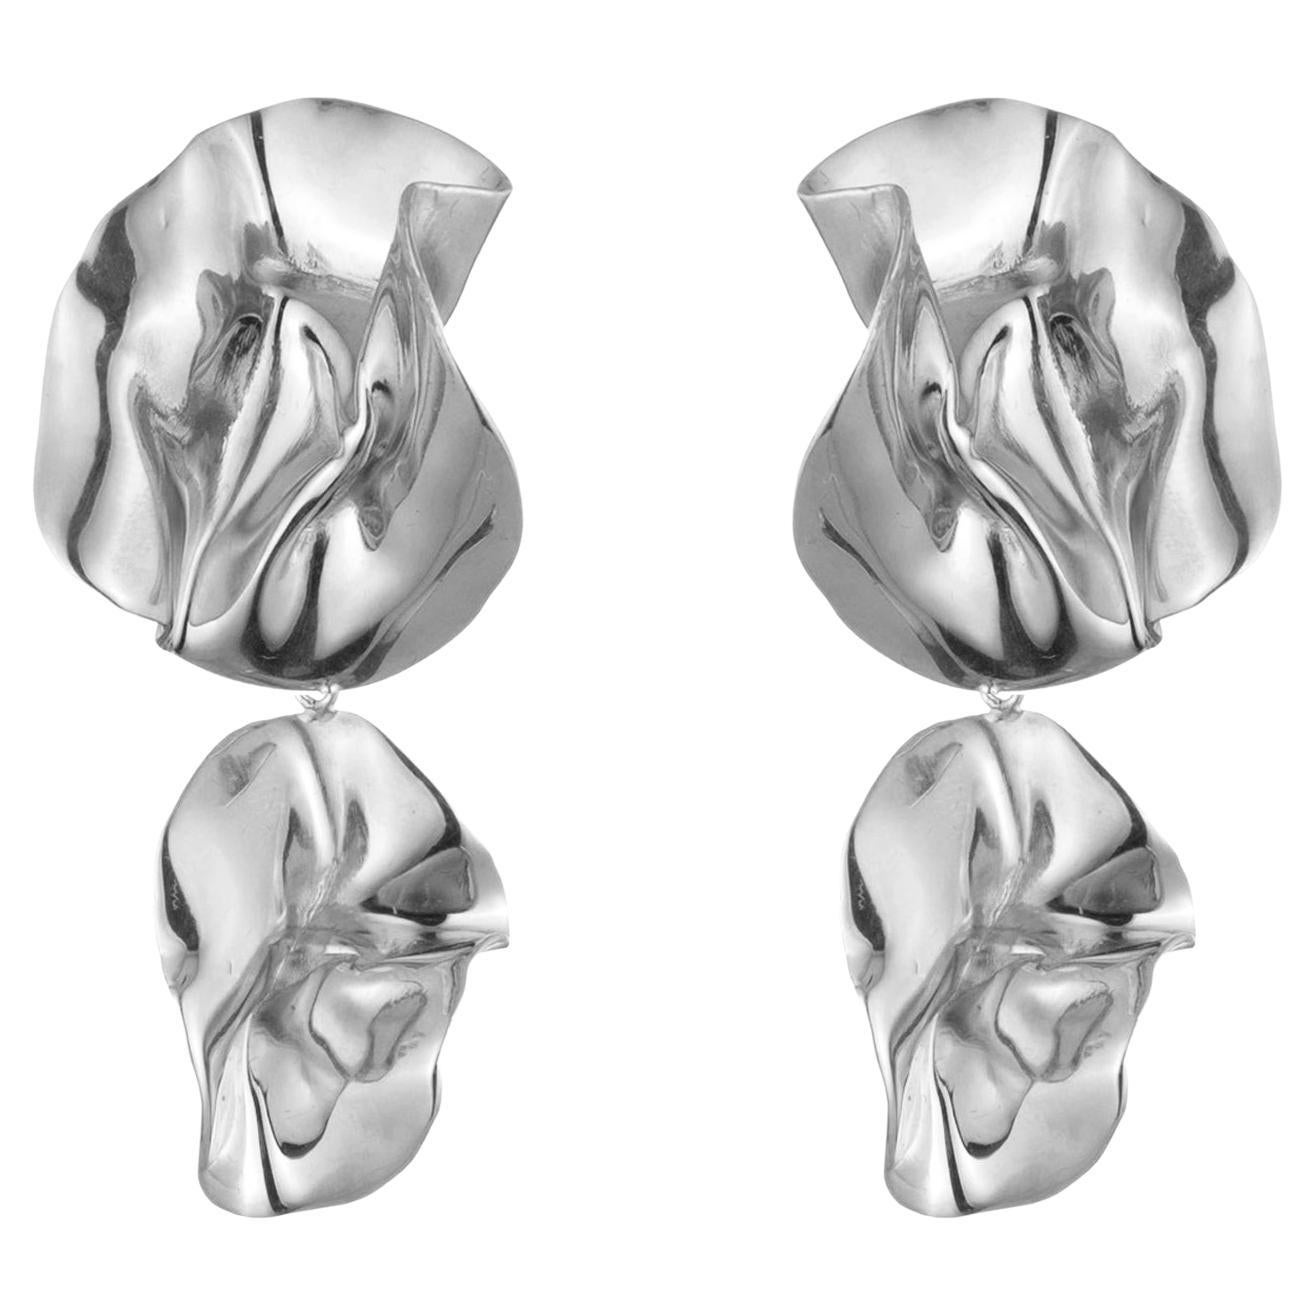 925 Sterling Silver Handmade Dangle Earrings, Chanel Earring - Inspire  Uplift